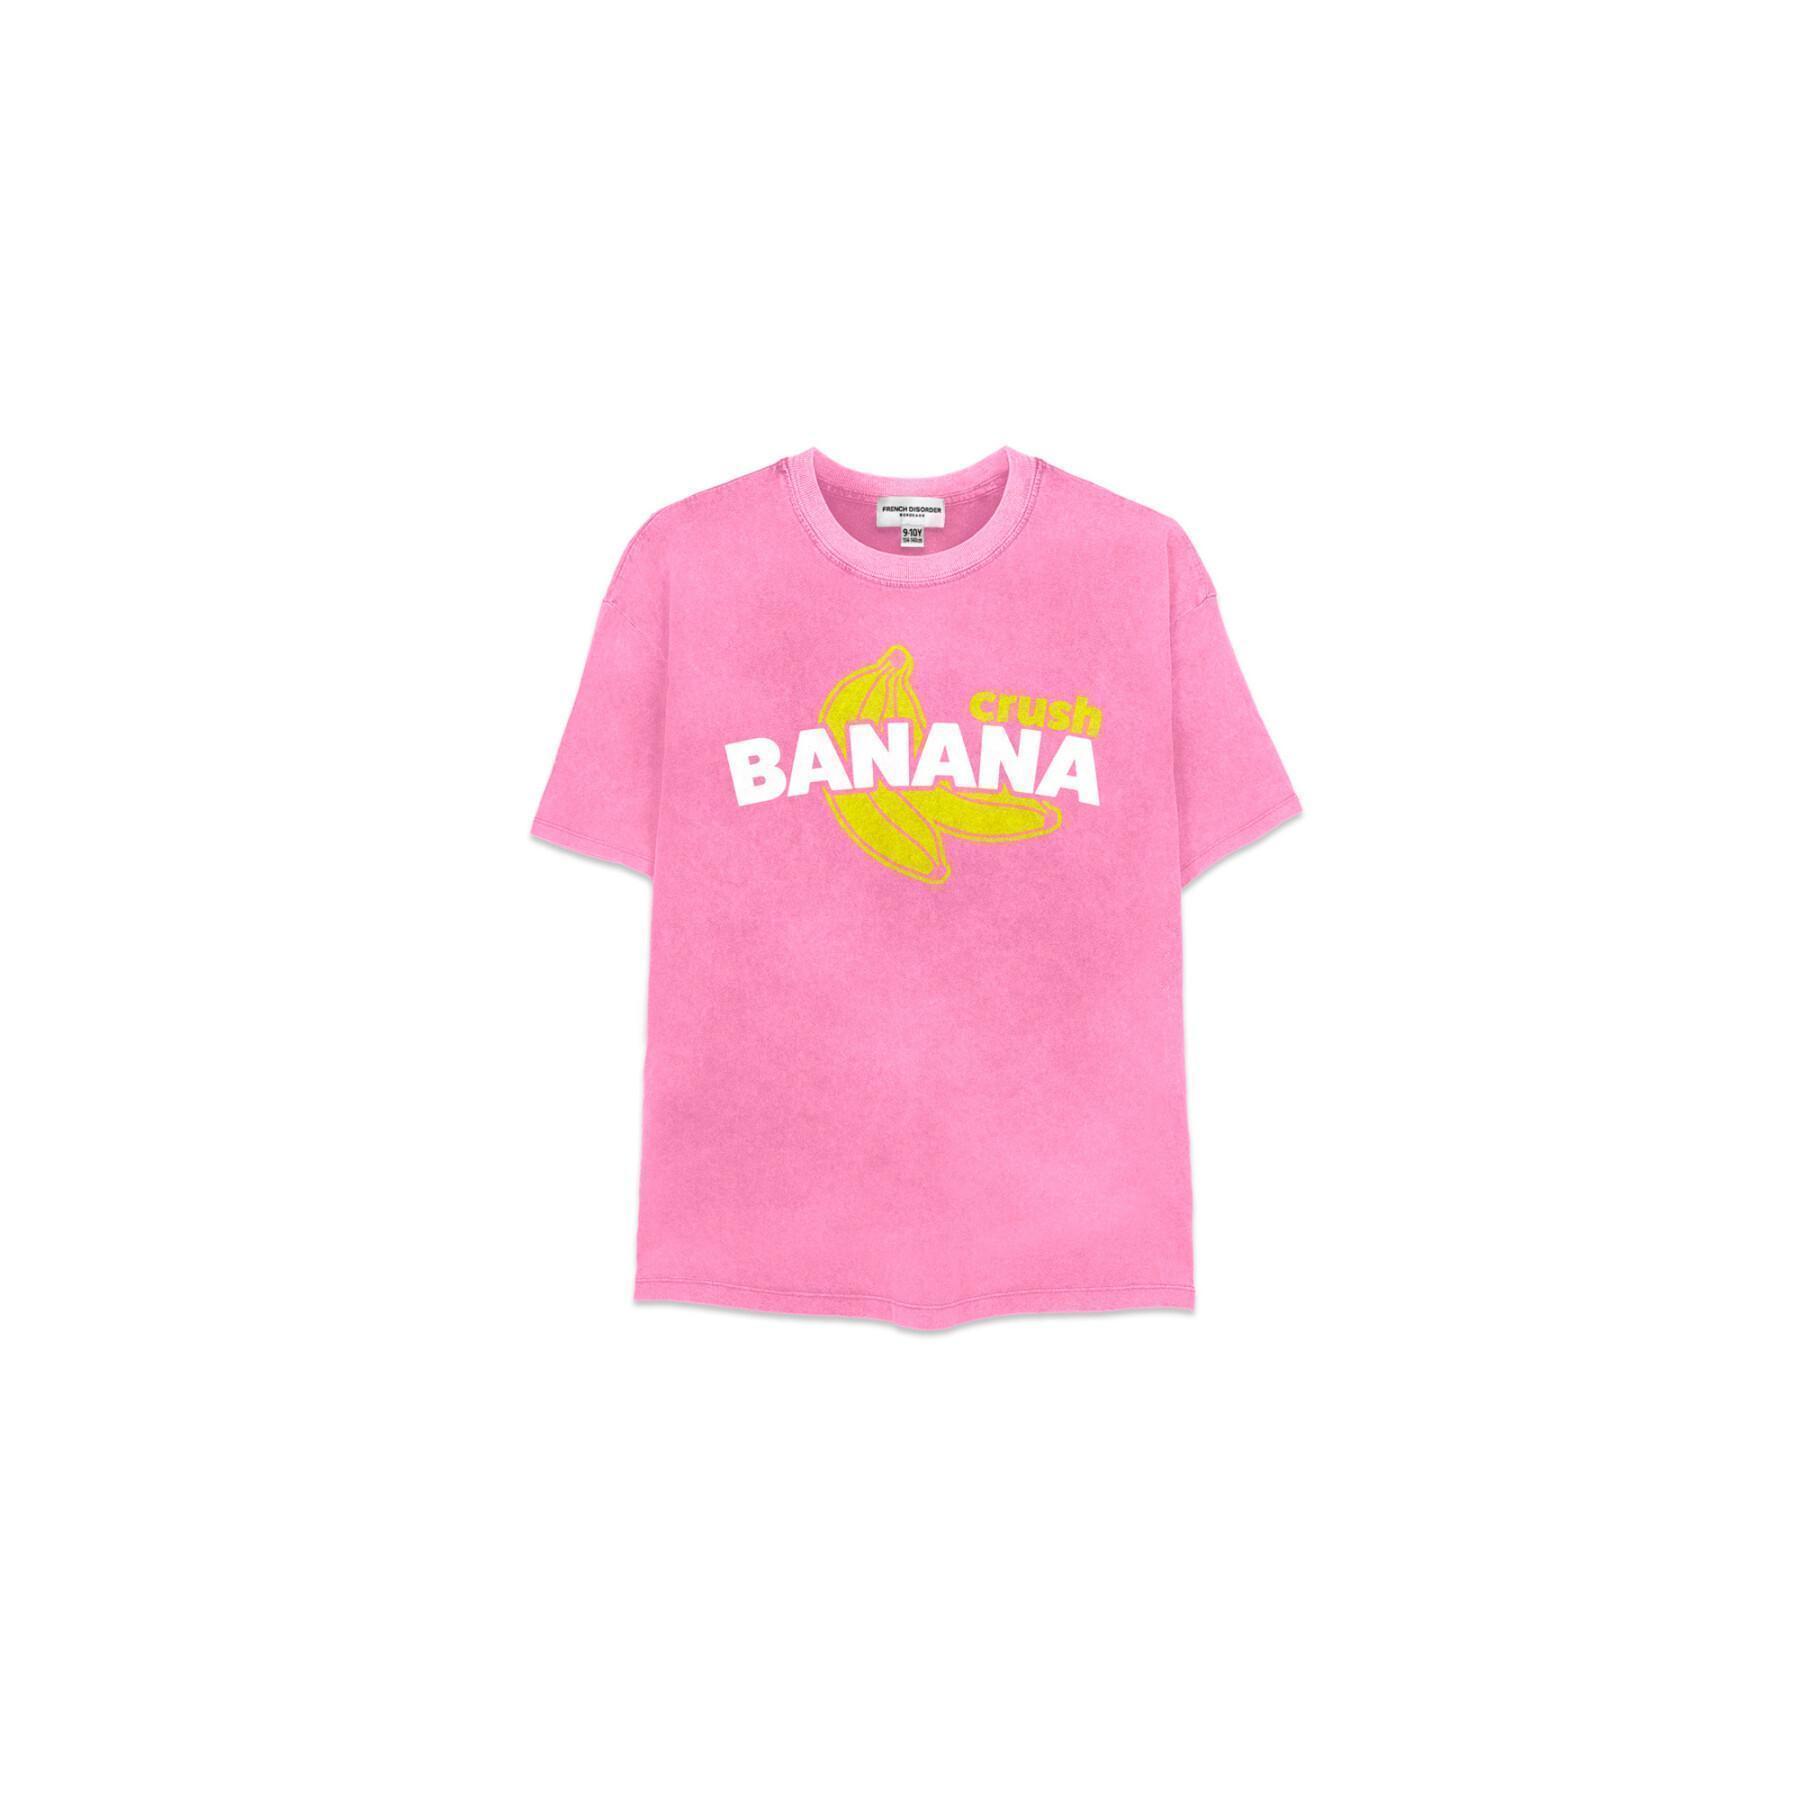 Camiseta para niños French Disorder Banana